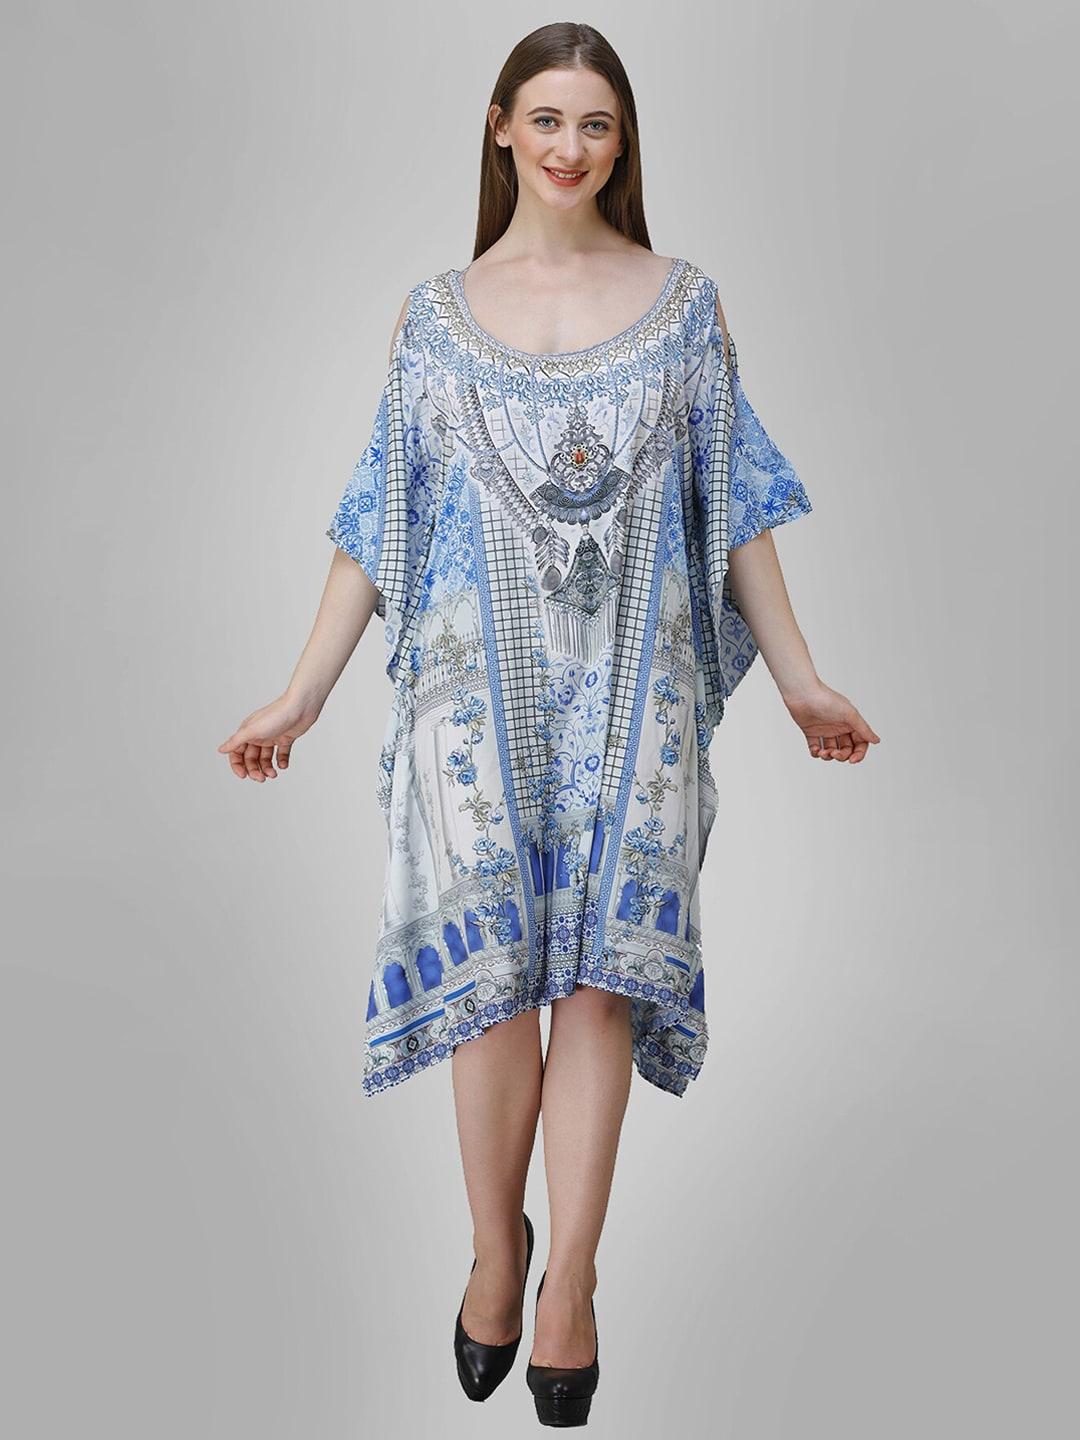 Rajoria Instyle Cream-Coloured & Blue Ethnic Motifs Georgette Kaftan Dress